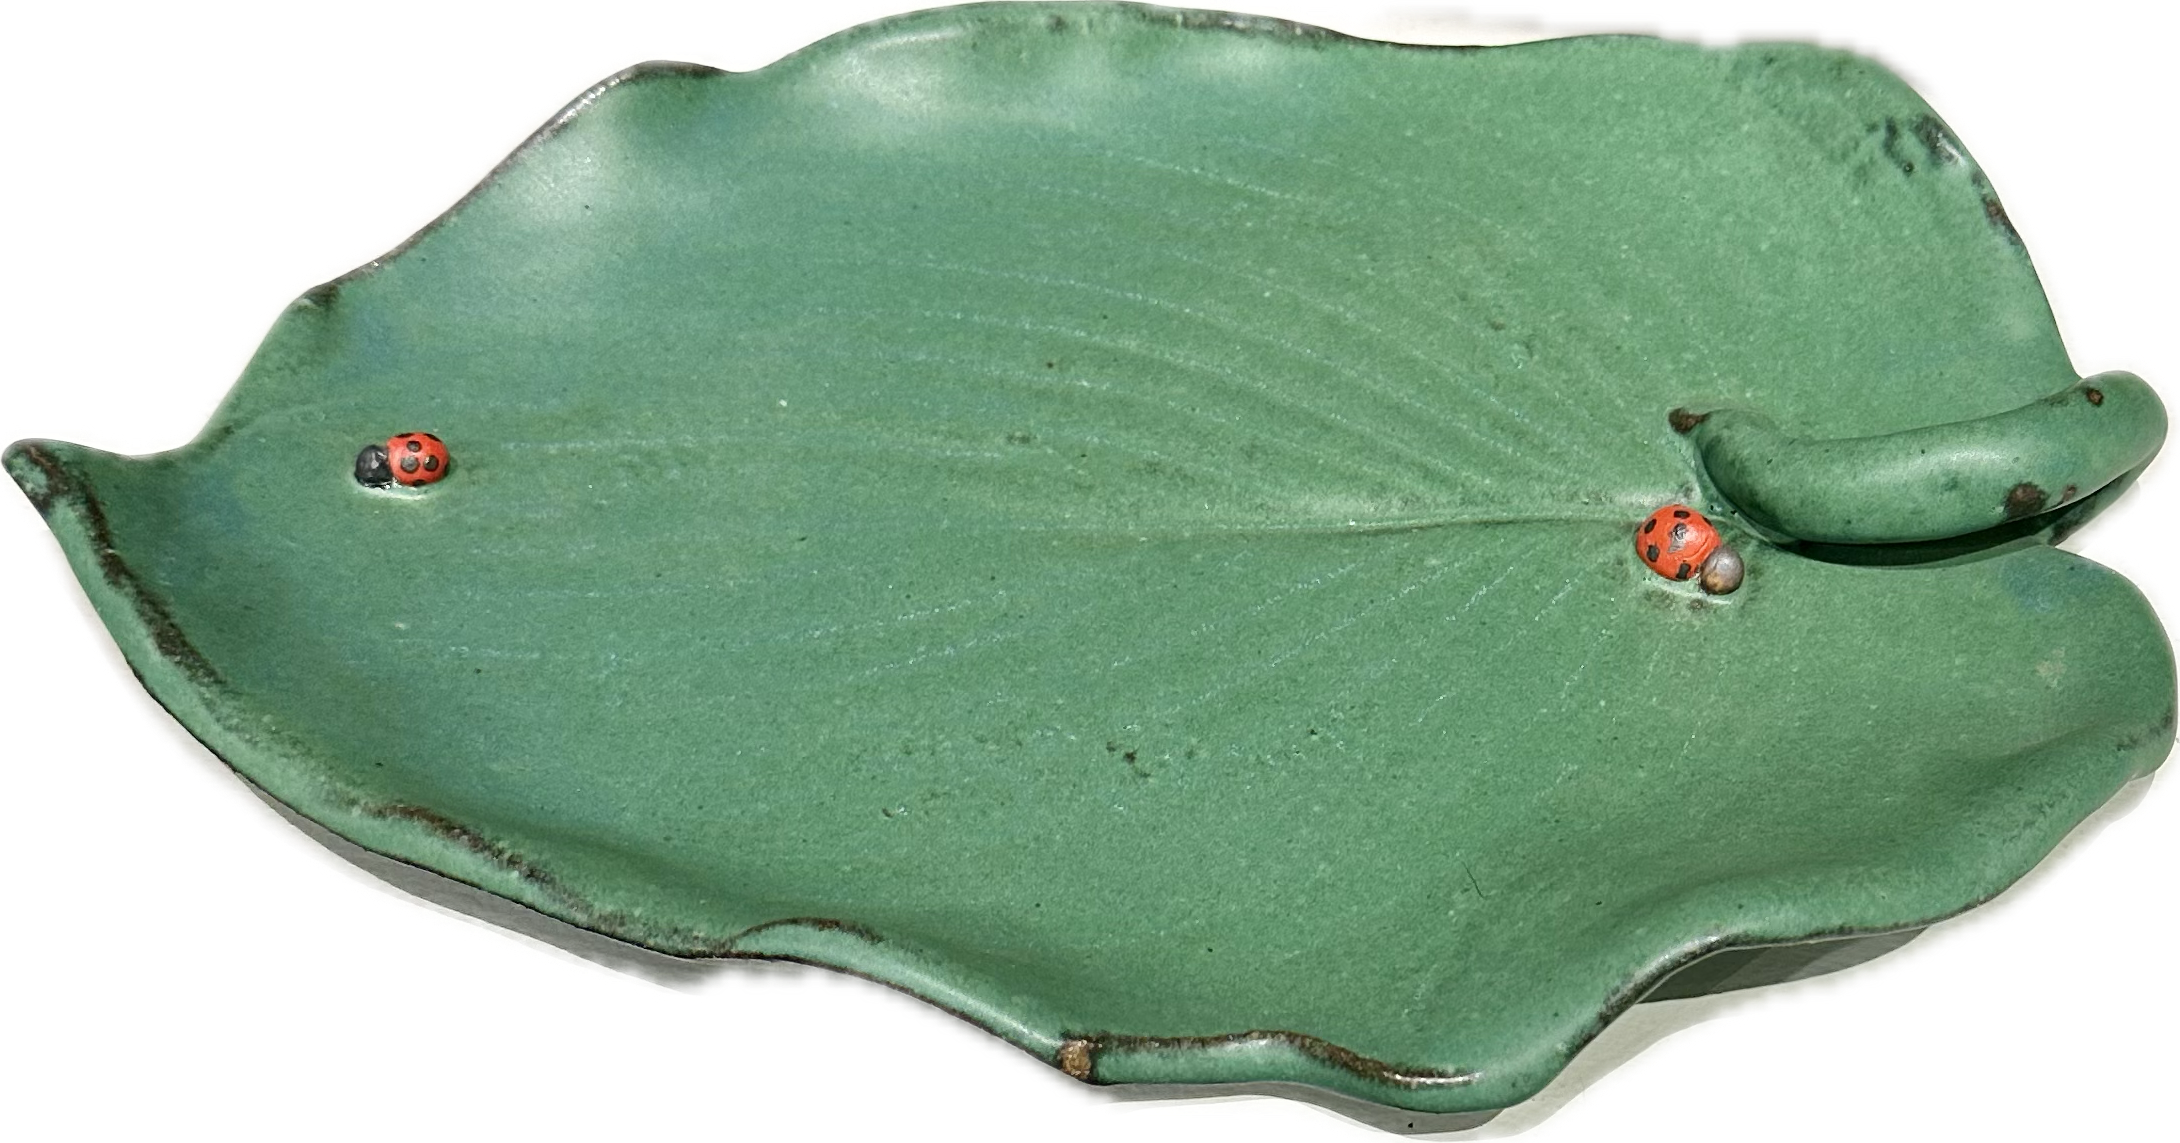 Green Leaf Plate - Ceramic - 9 x 12 - Goro #118